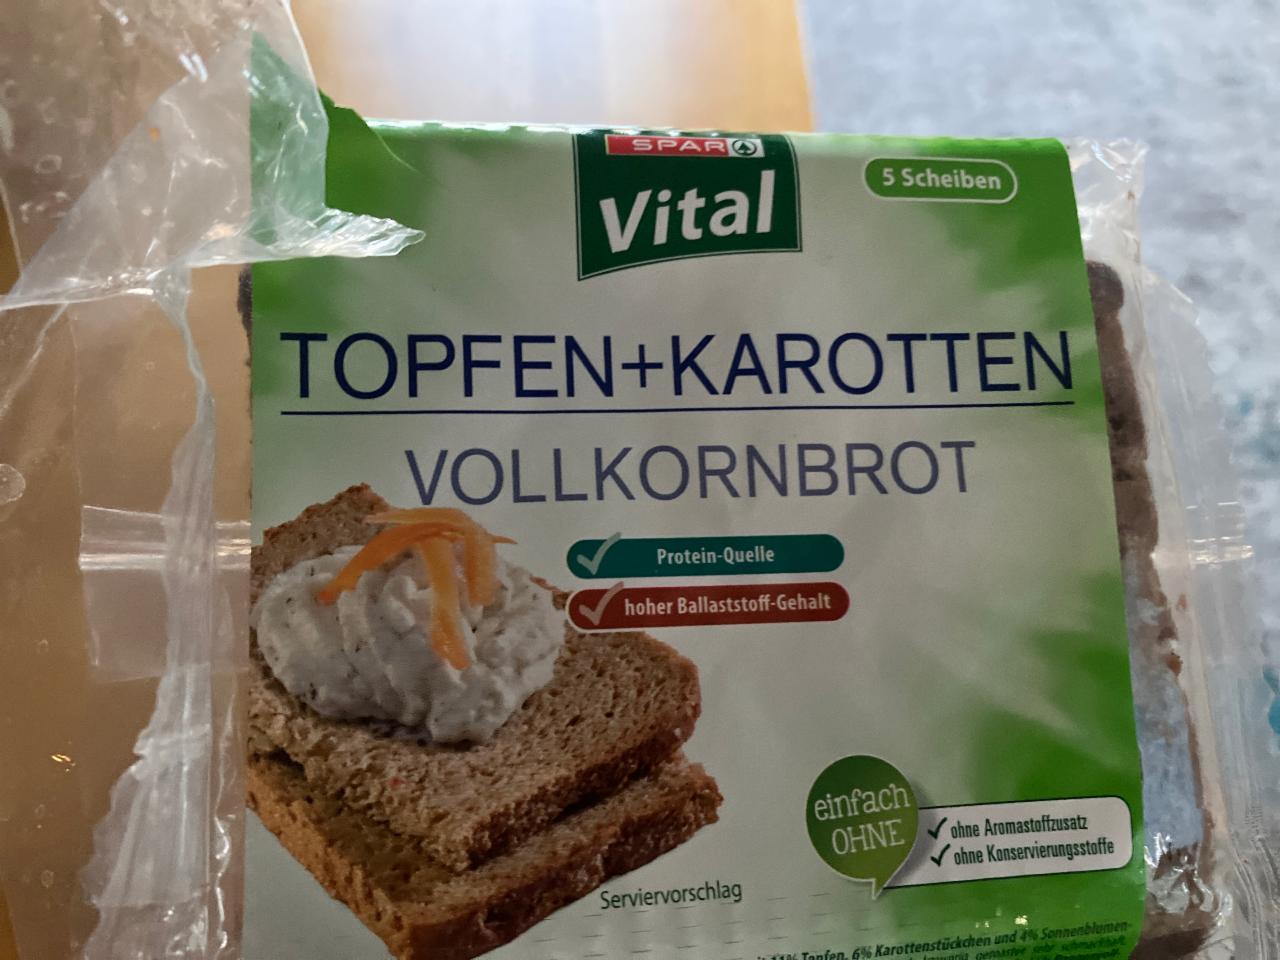 Fotografie - Topfen + Karotten Vollkornbrot Kalorien Spar Vital